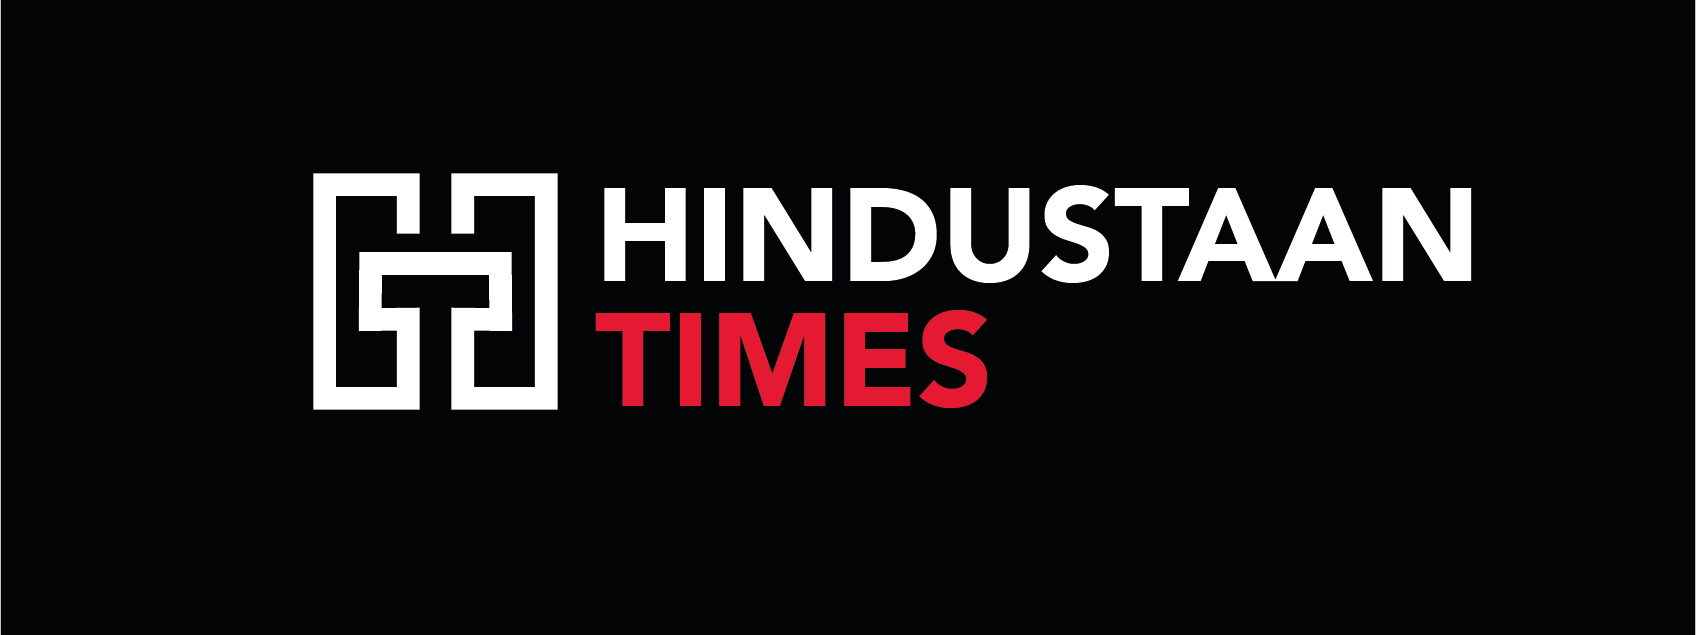 Hindustaan Times